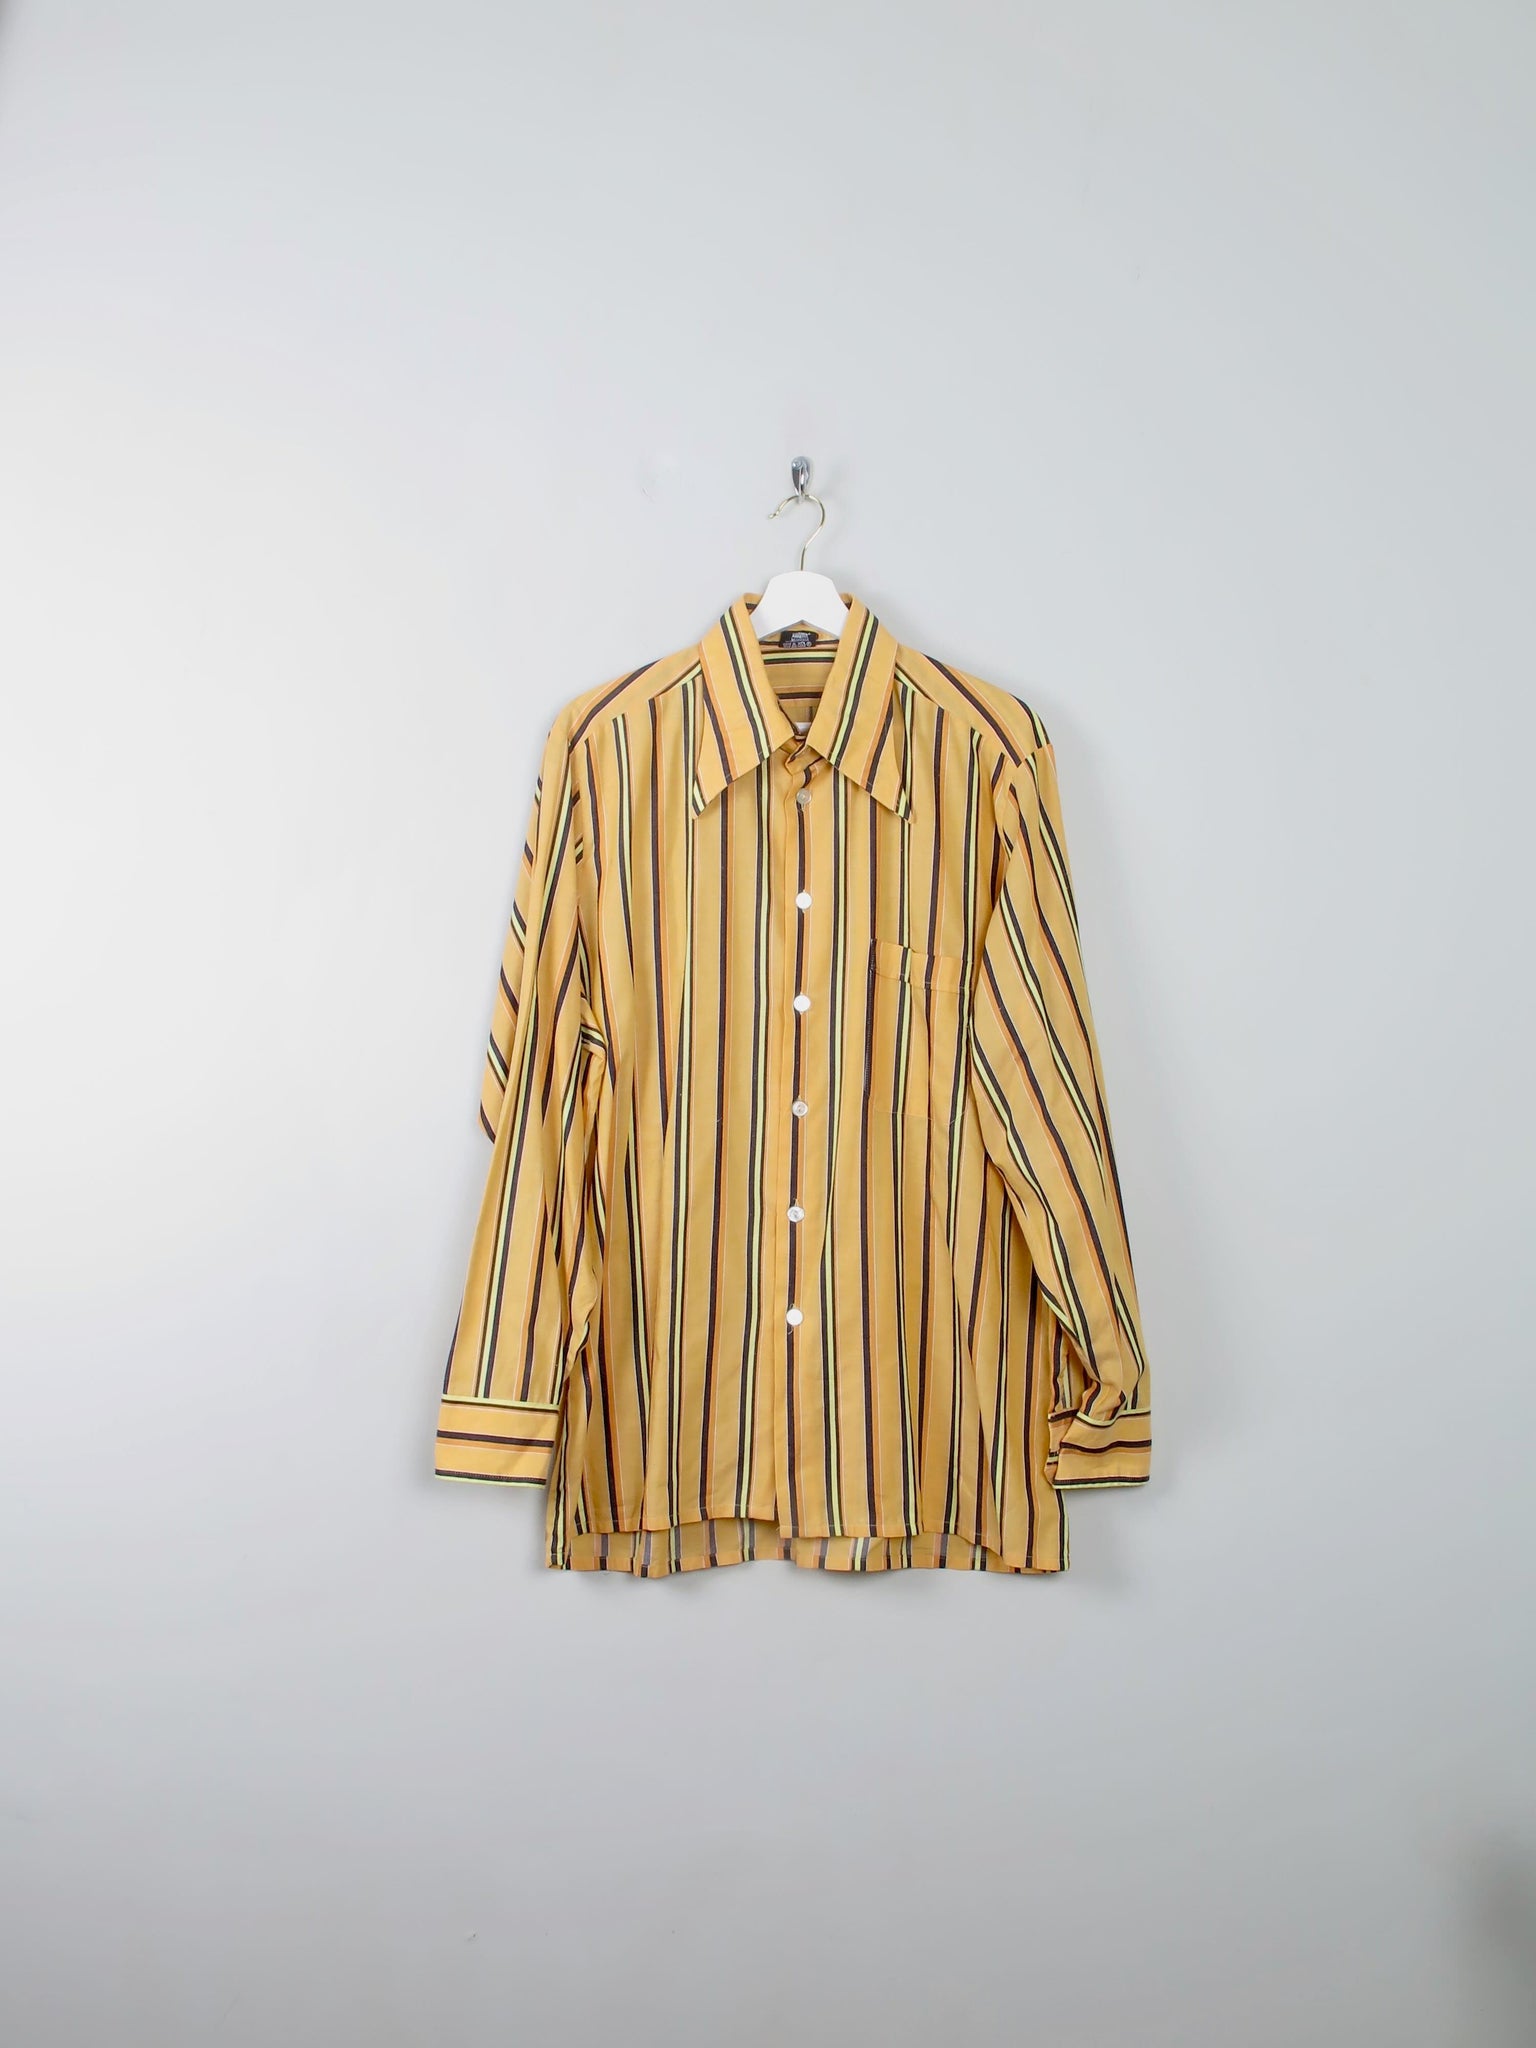 Men's Vintage Striped Yellow Shirt XL - The Harlequin